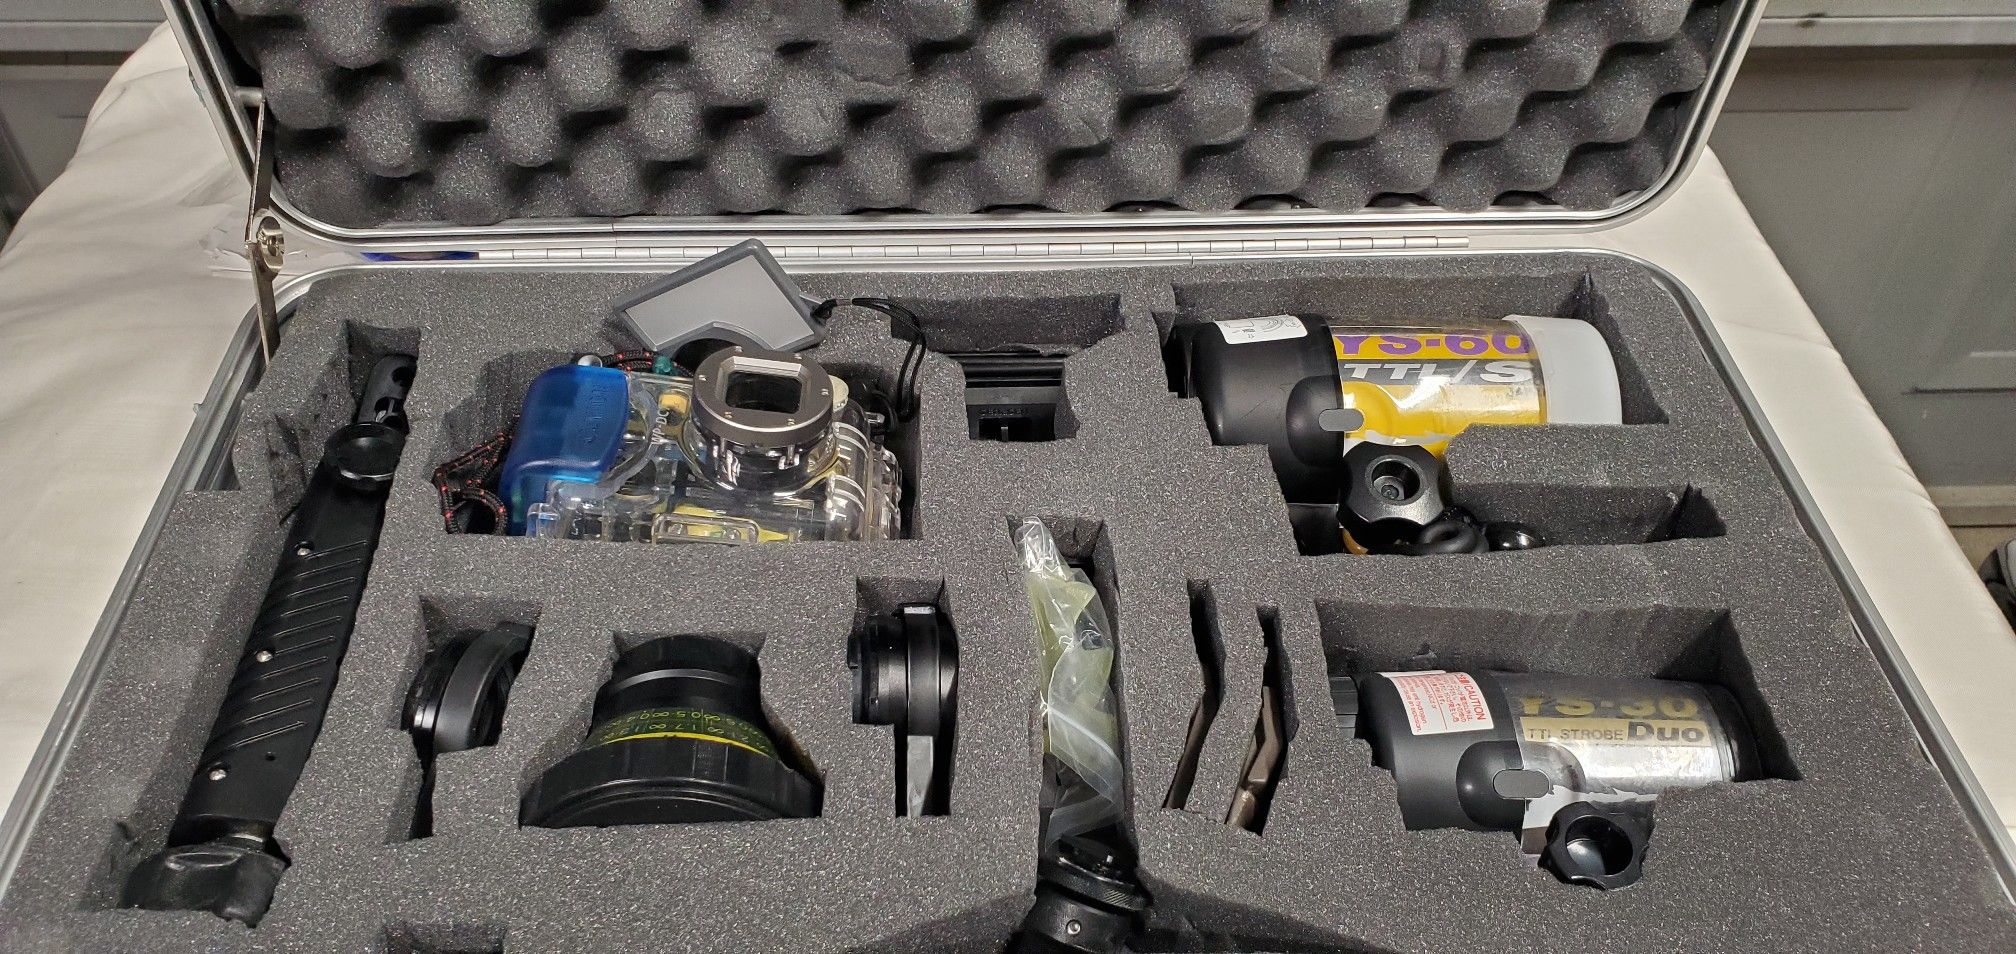 Sea & sea strobe and lens kit